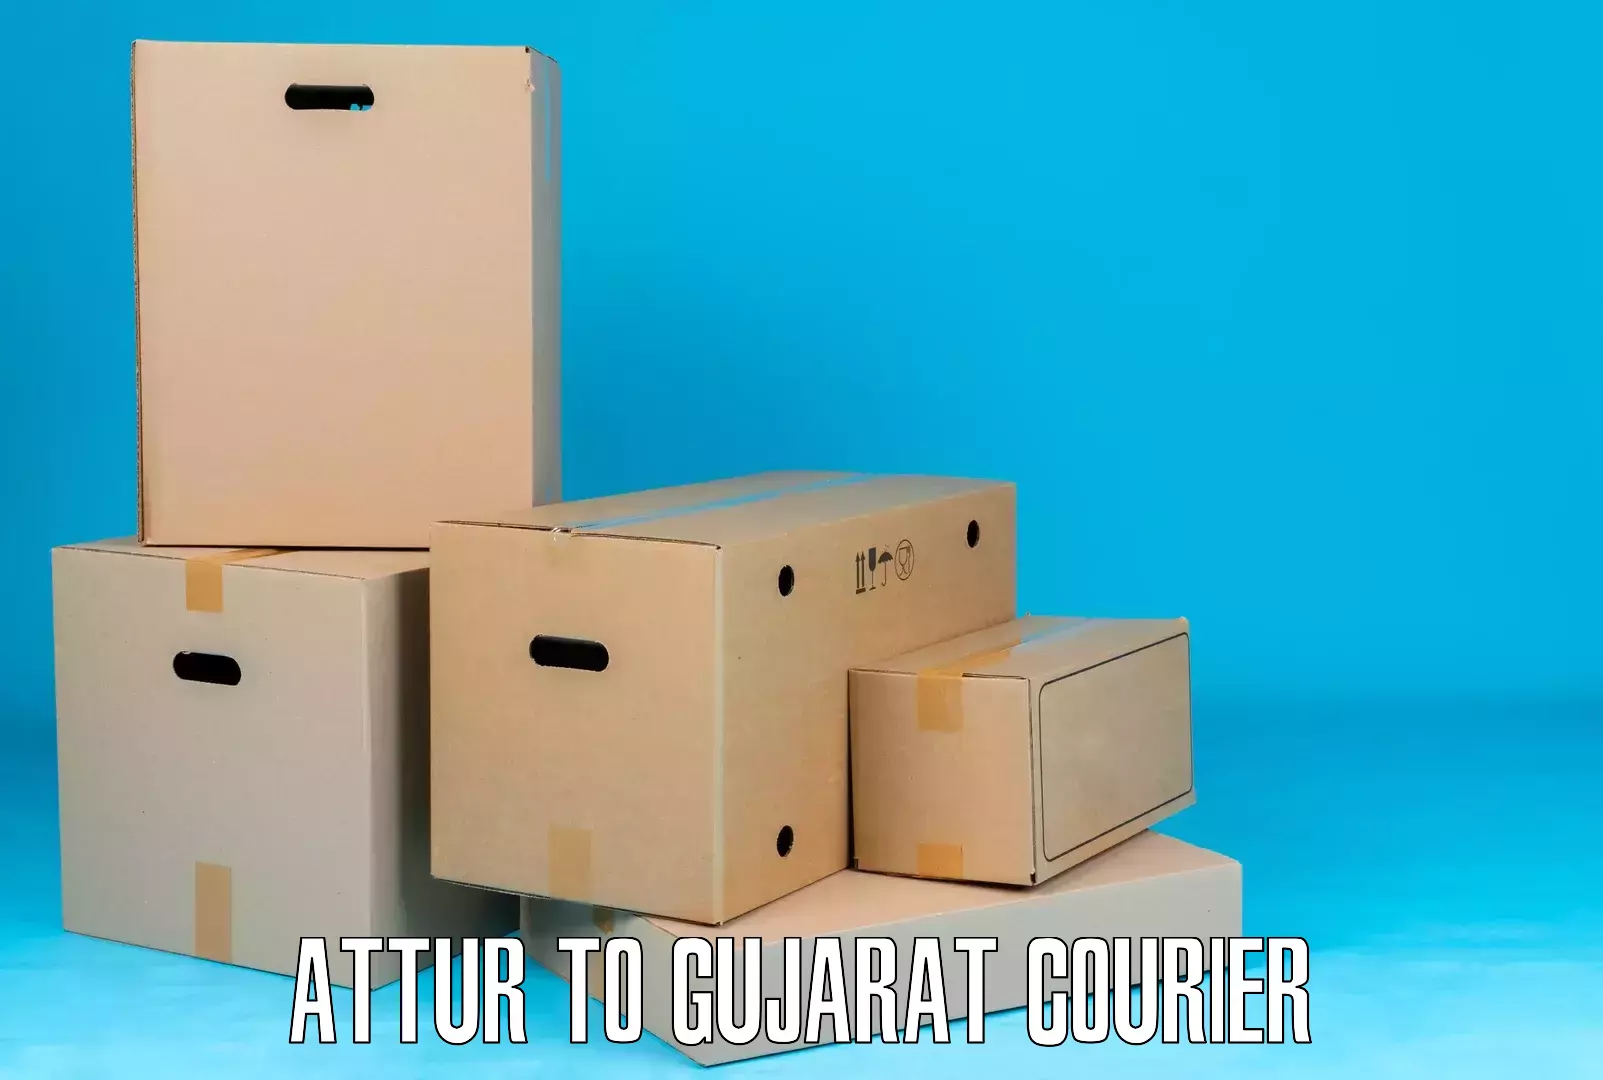 Professional courier handling Attur to Gujarat